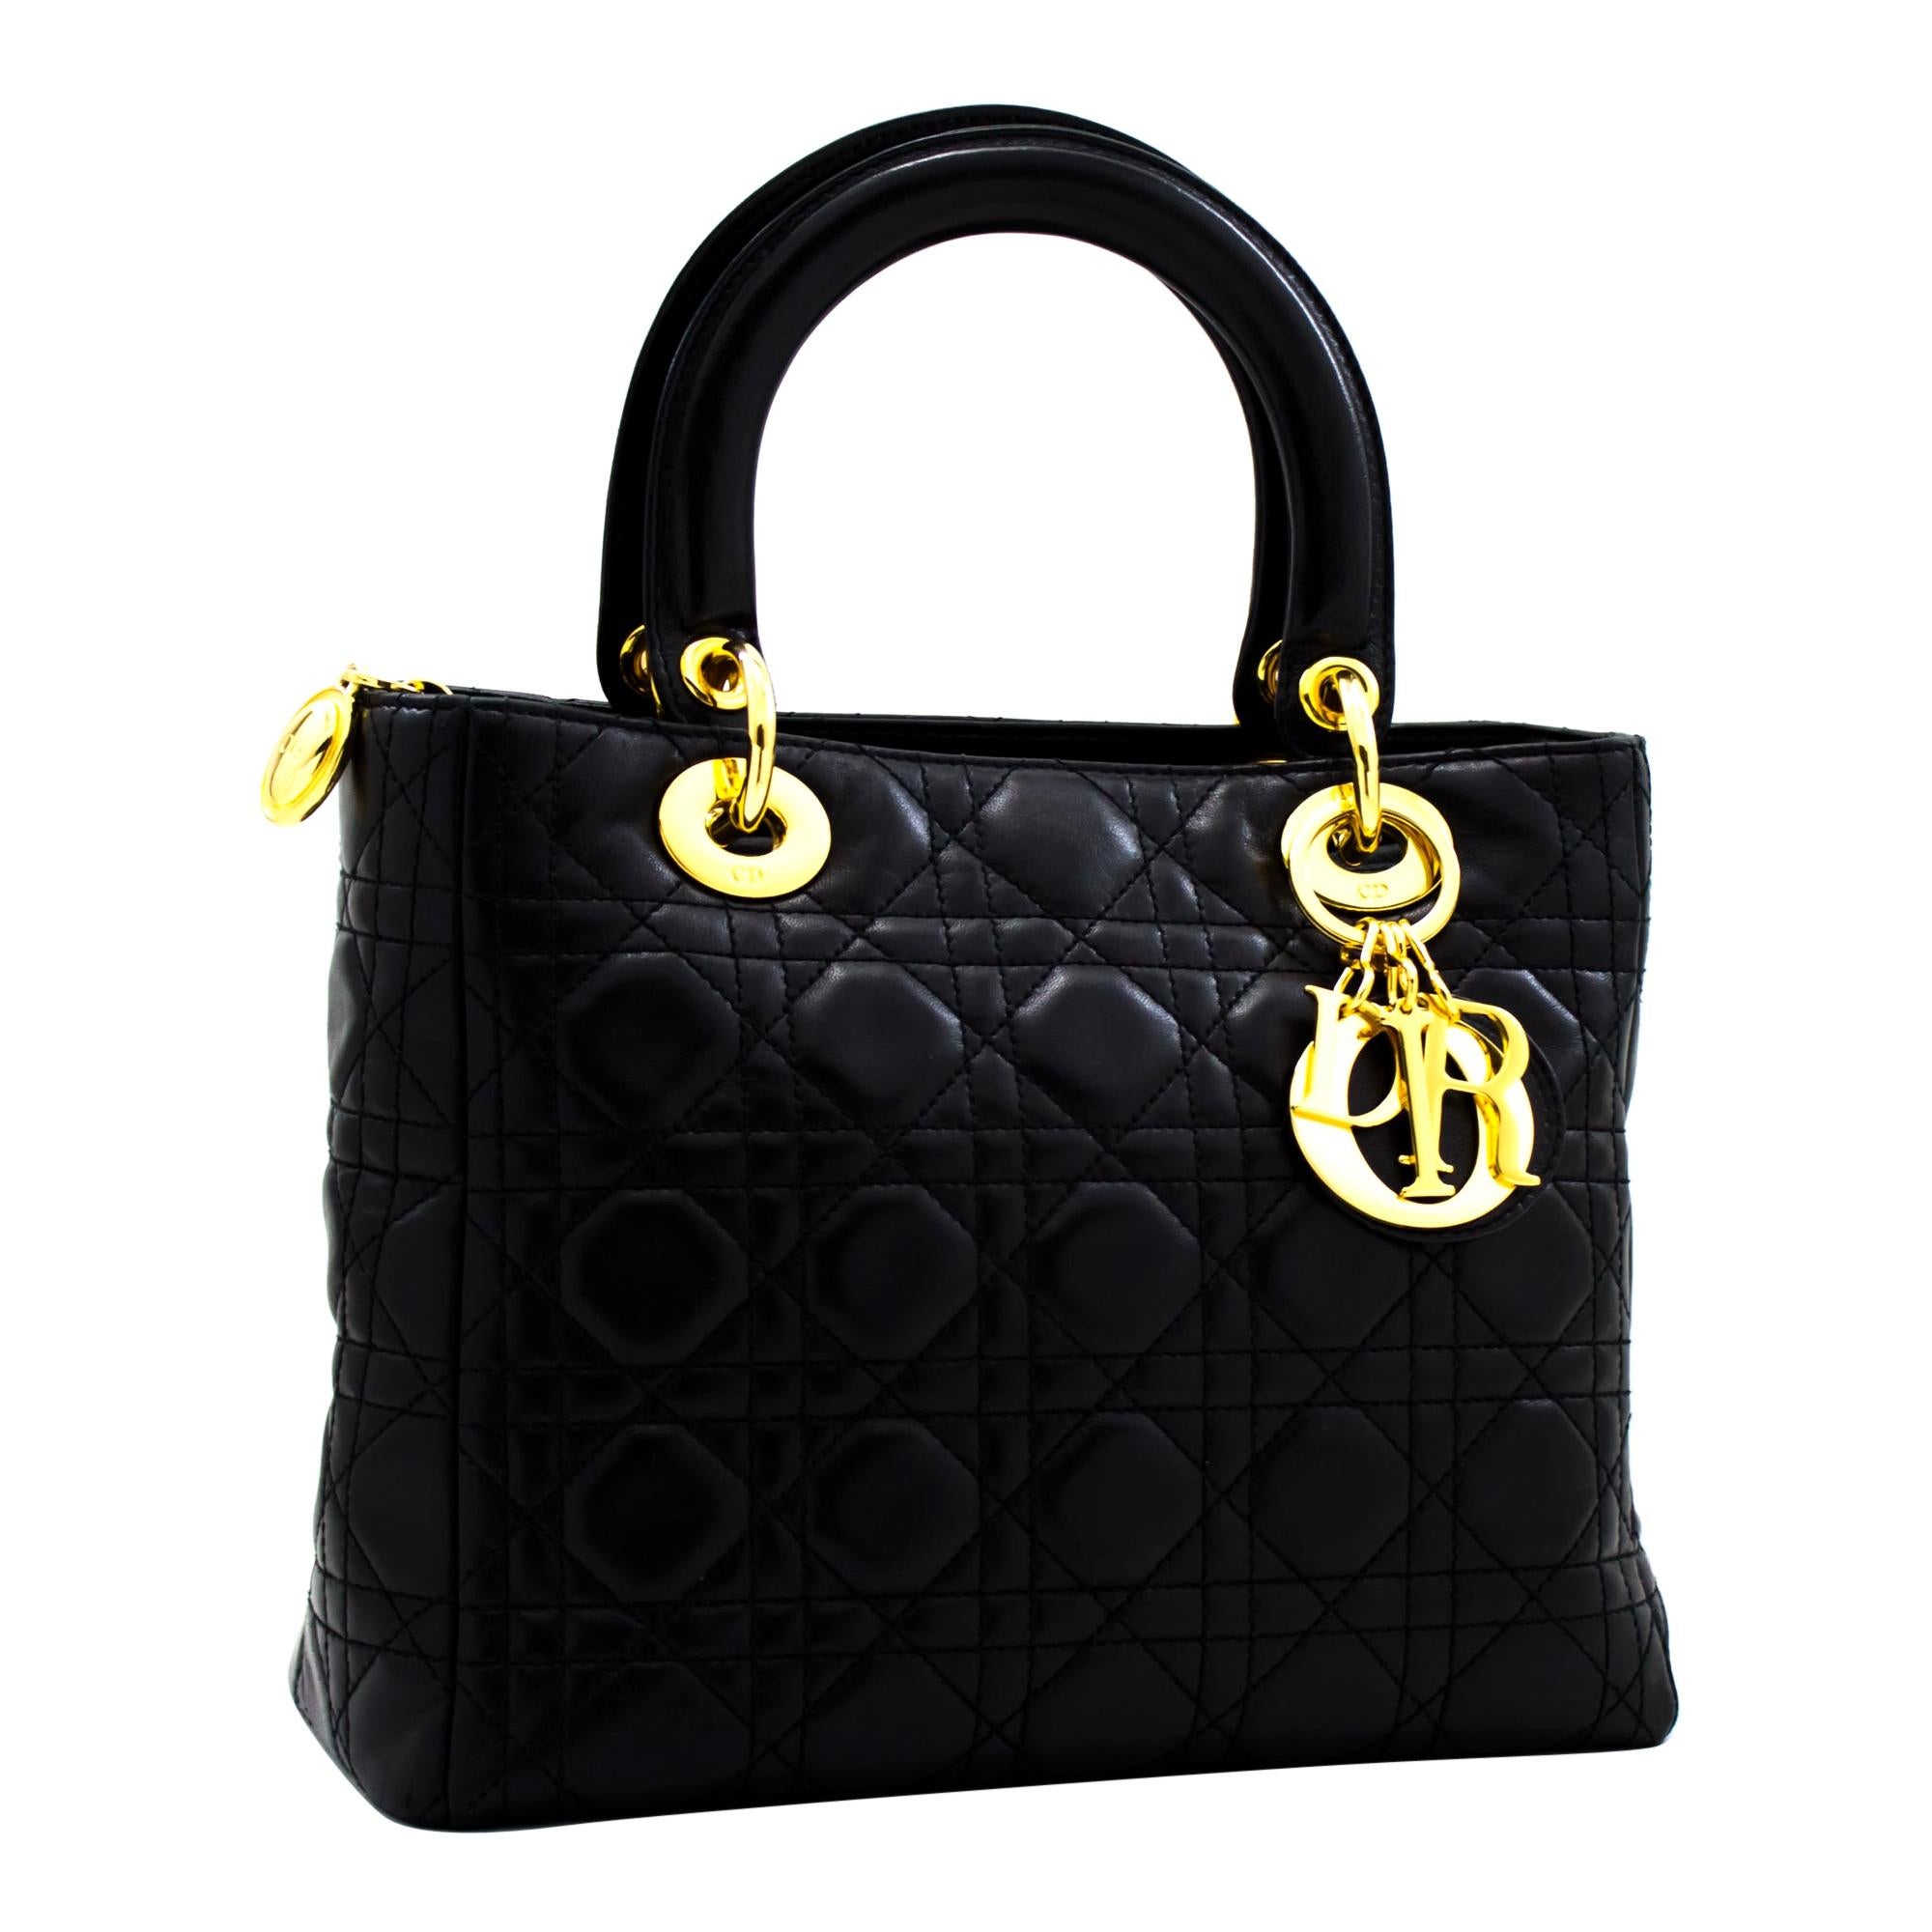 Christian Dior Lady Dior Cannage Handbag Bag Leather Black Vintage